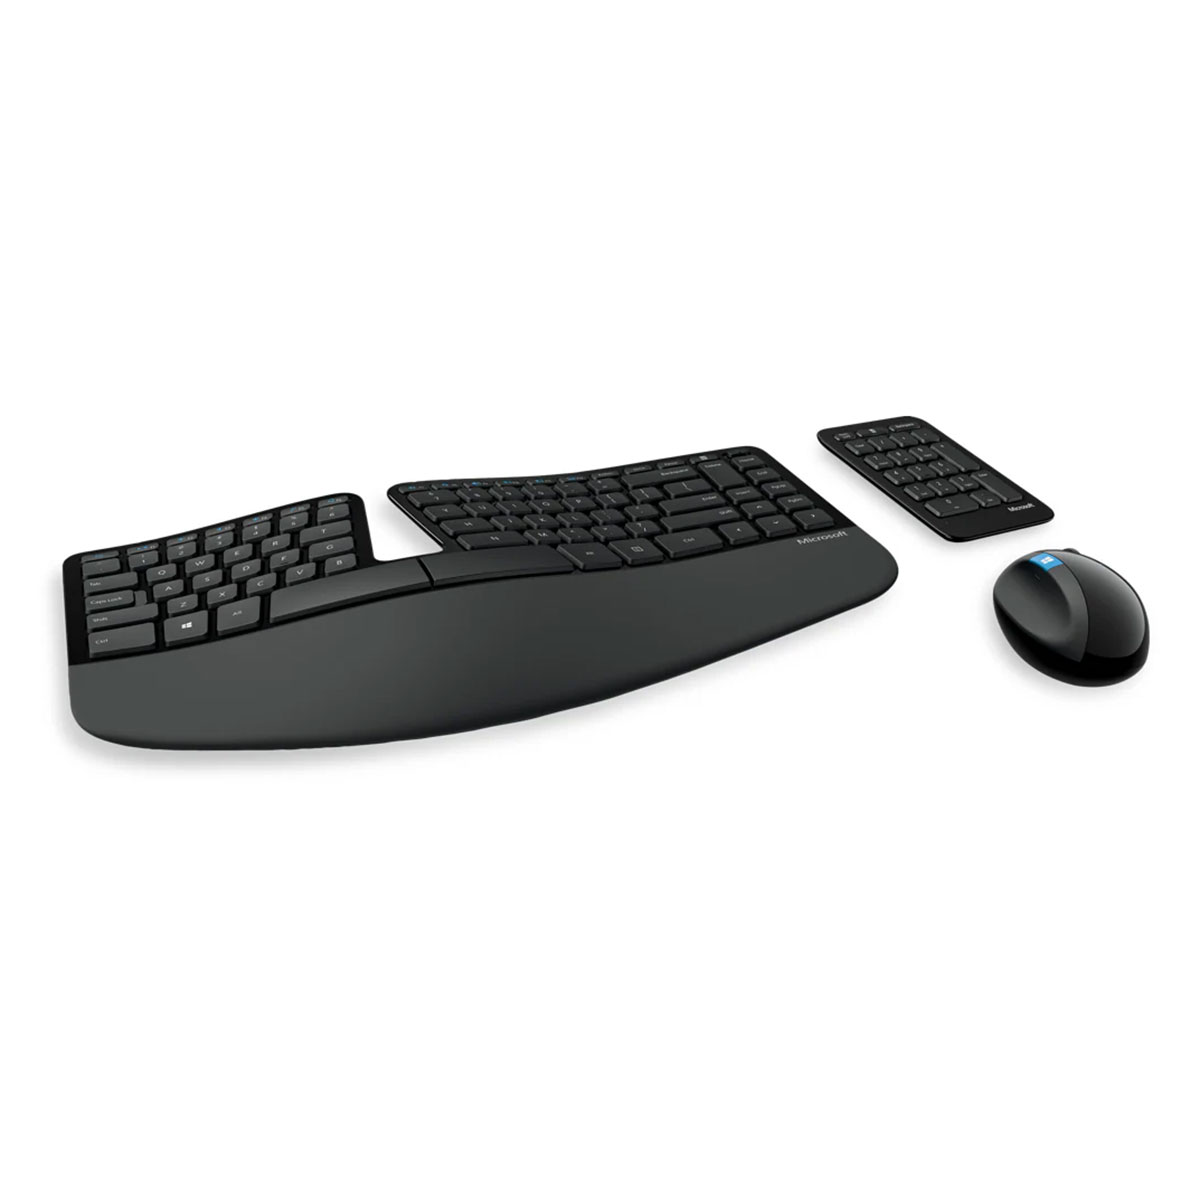 Kabelloses Tastatur-Maus-Set Microsoft Sculpt Ergonomic Desktop vertical